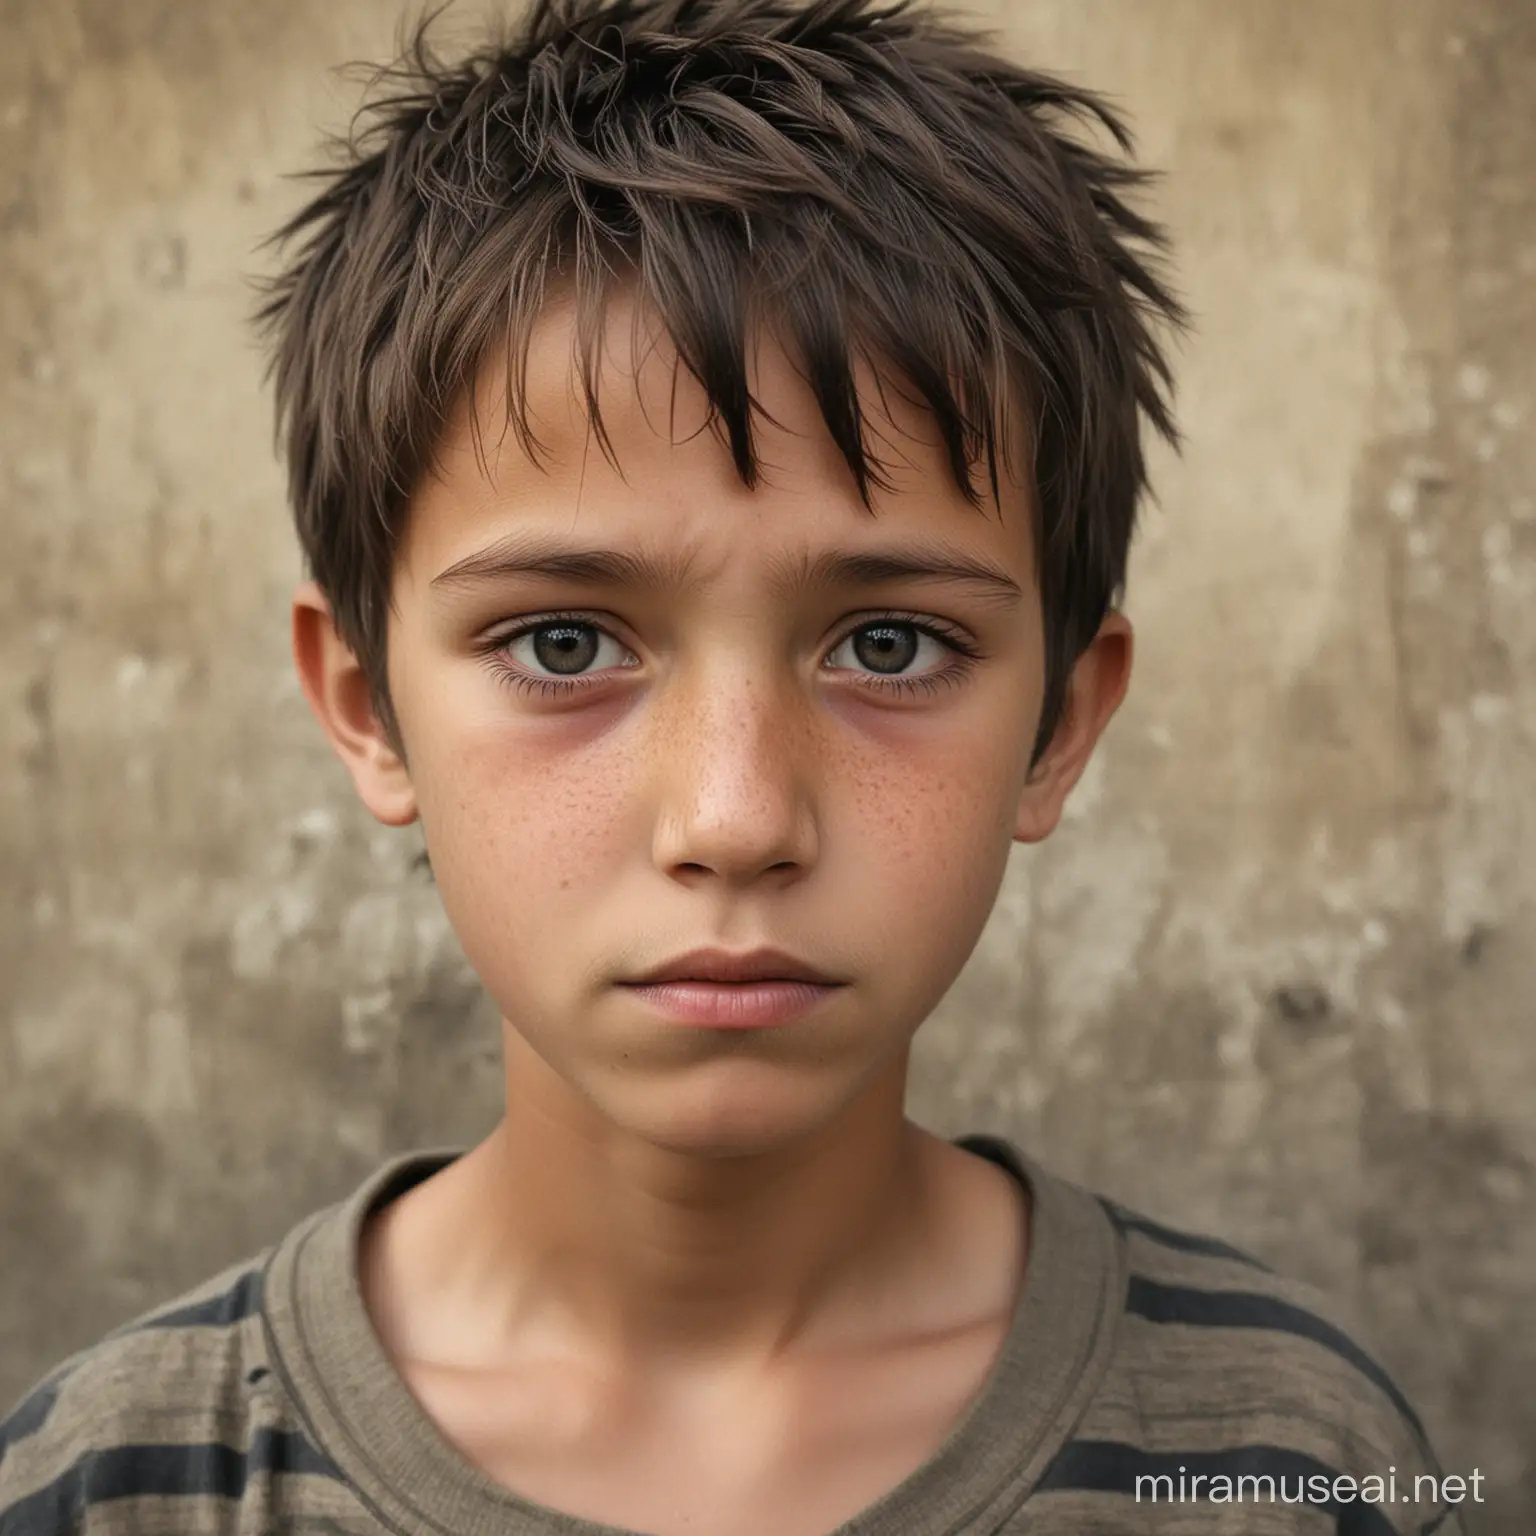 Sympathetic Portrait of a Disadvantaged Boy